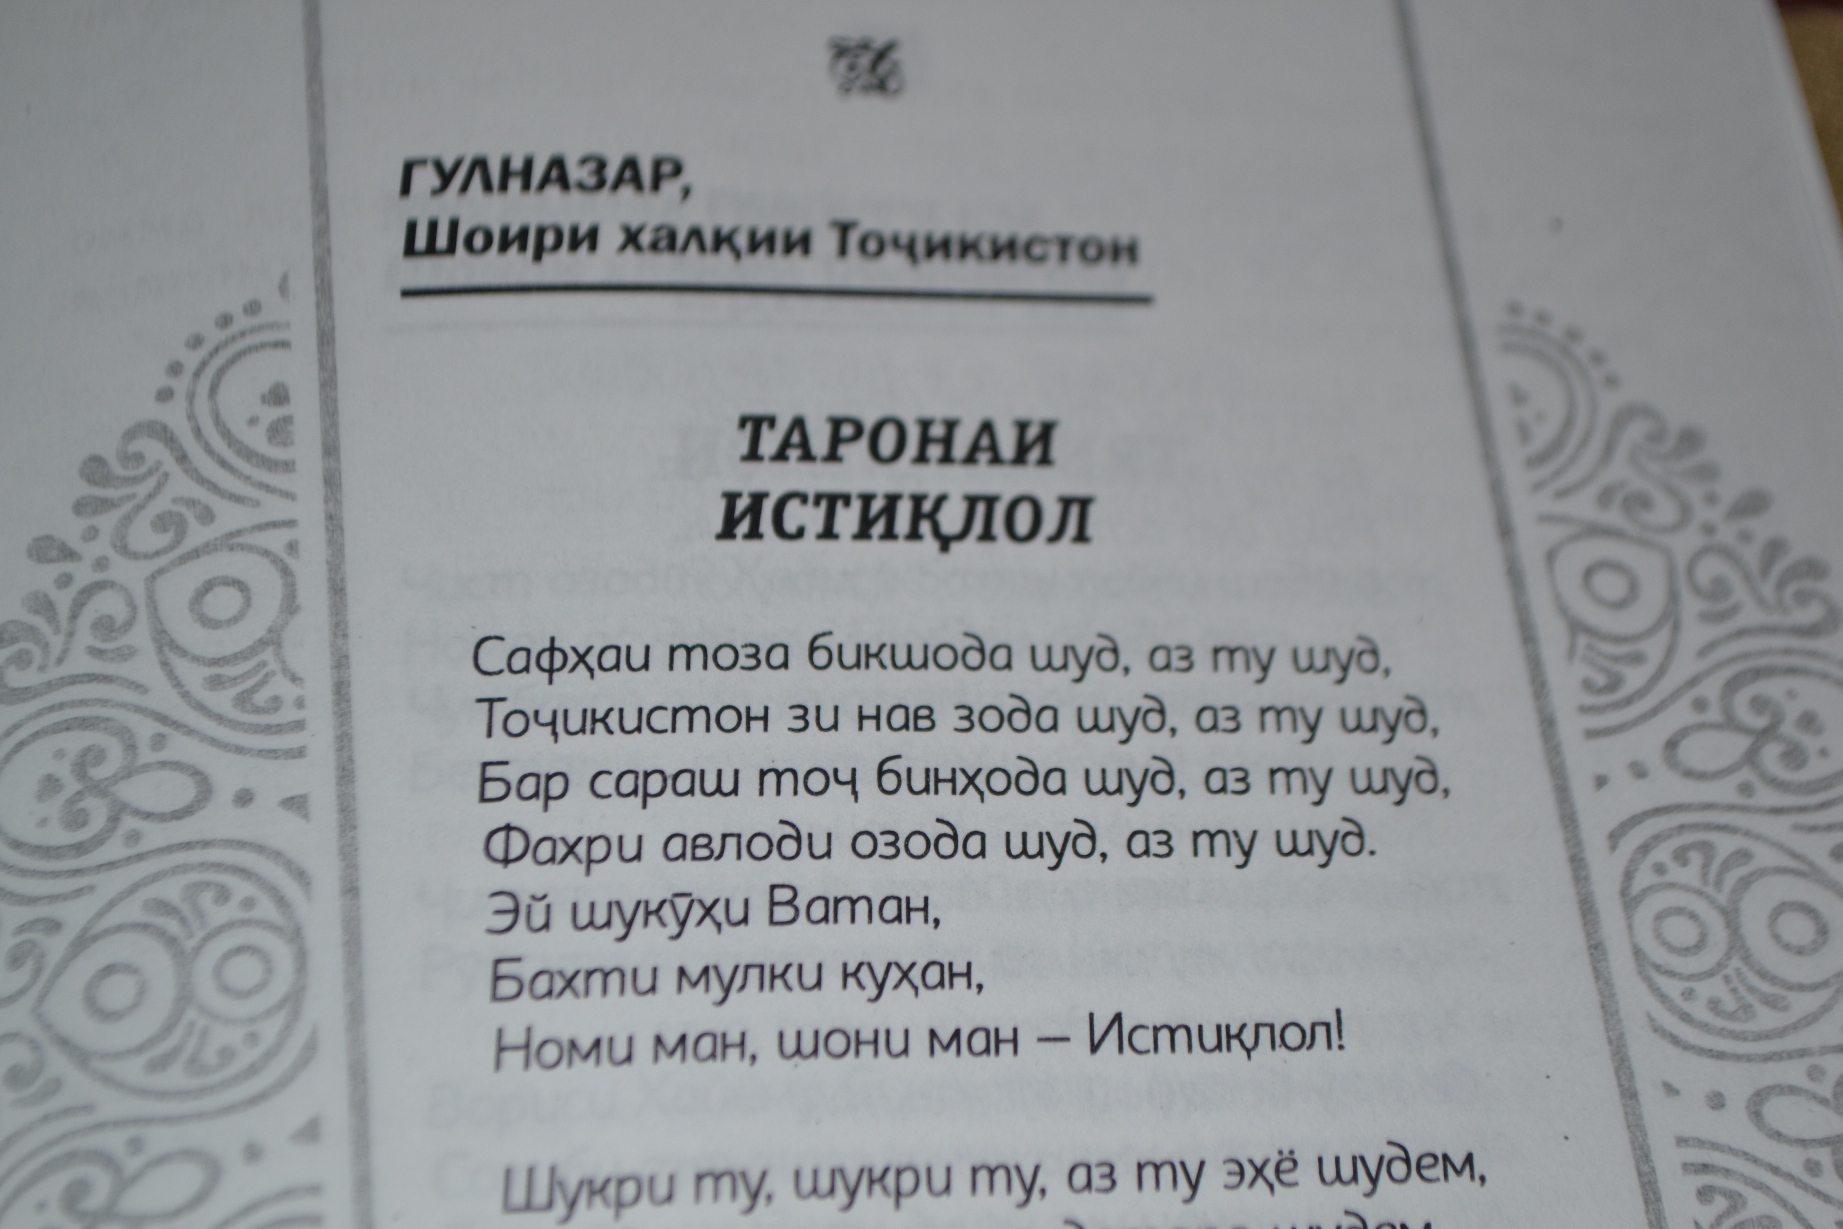 Таджикские стихи про язык. Таджикские стихотворения. Стихи на таджикском языке. Стихотворение про Таджикистан. Сих на таджикском языке.